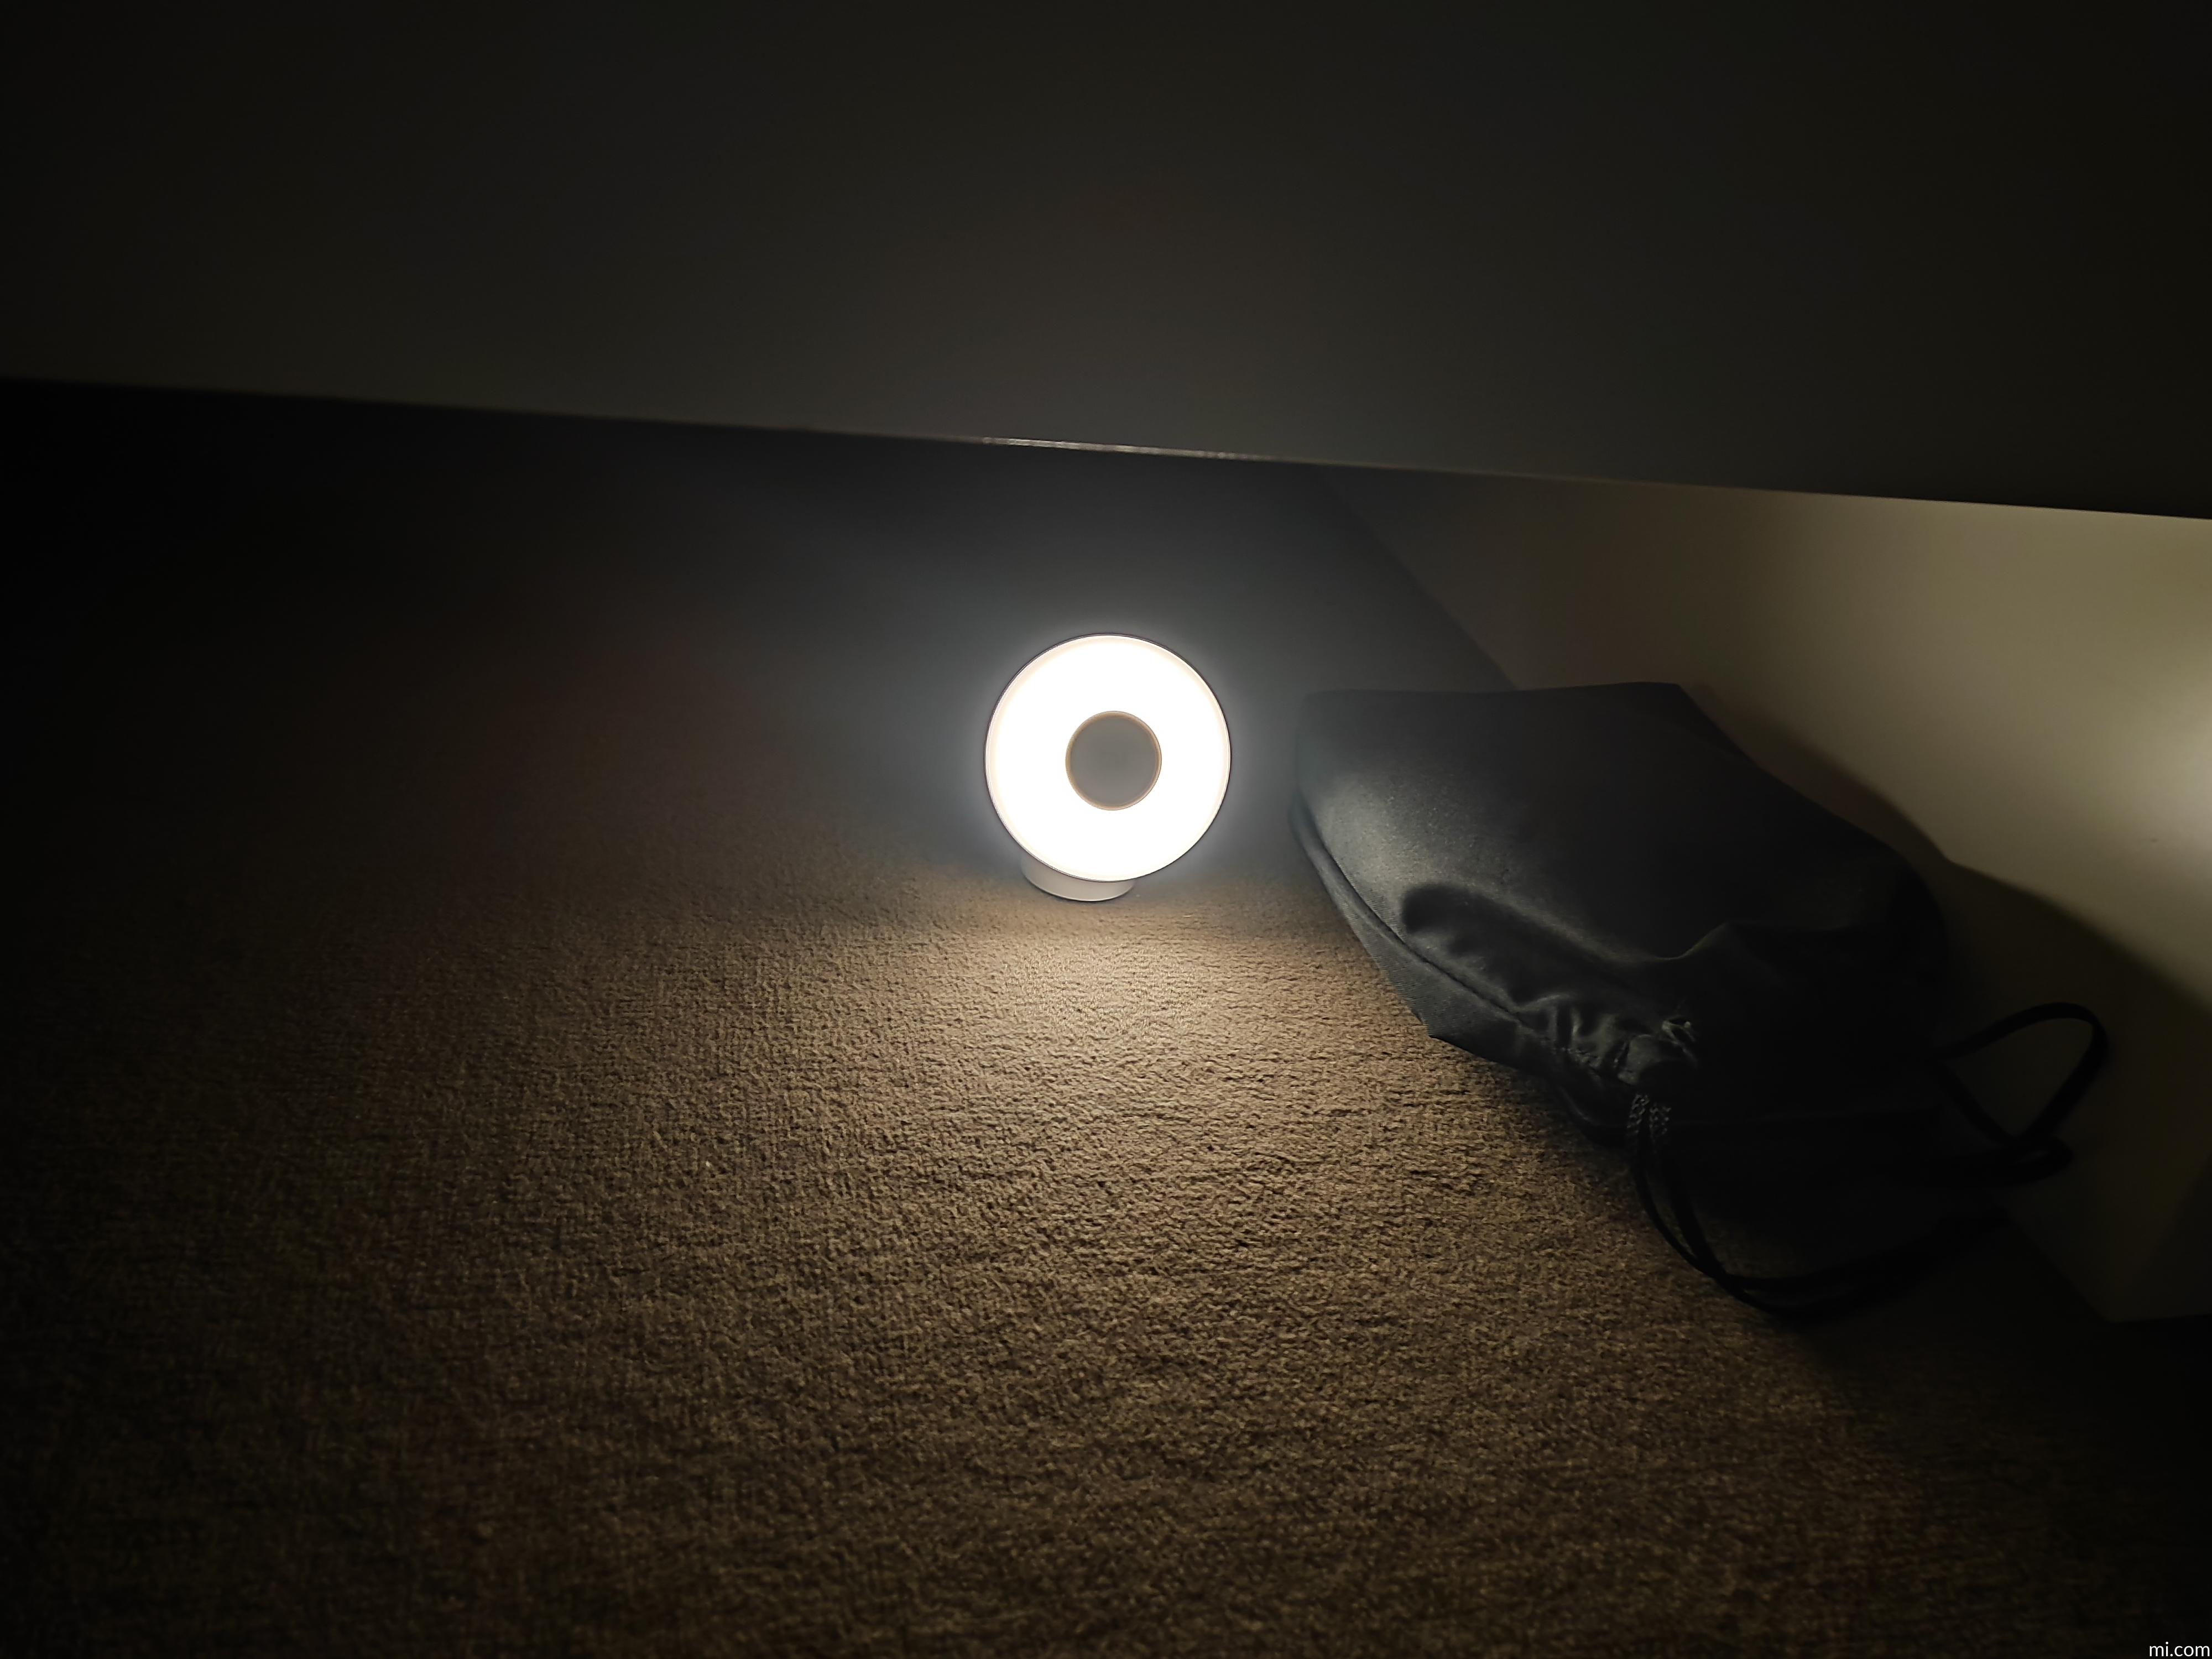 Xiaomi Mi Motion Activated Night Light 2 - Just ₹500!! 